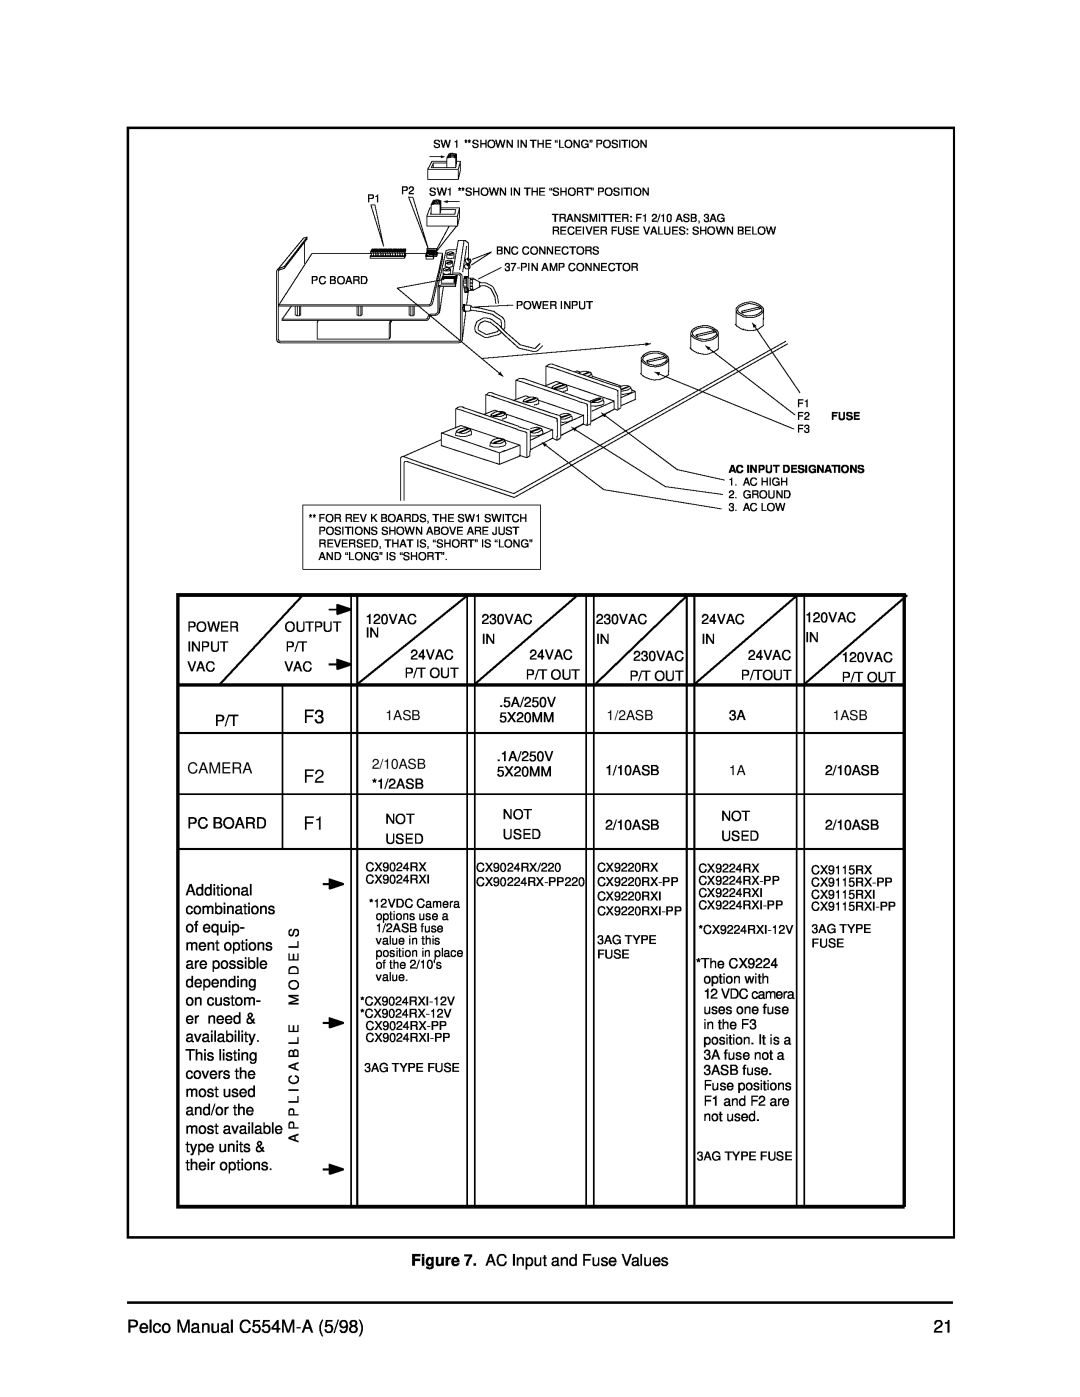 Pelco C554M-A (5/98) operation manual Pelco Manual C554M-A 5/98 